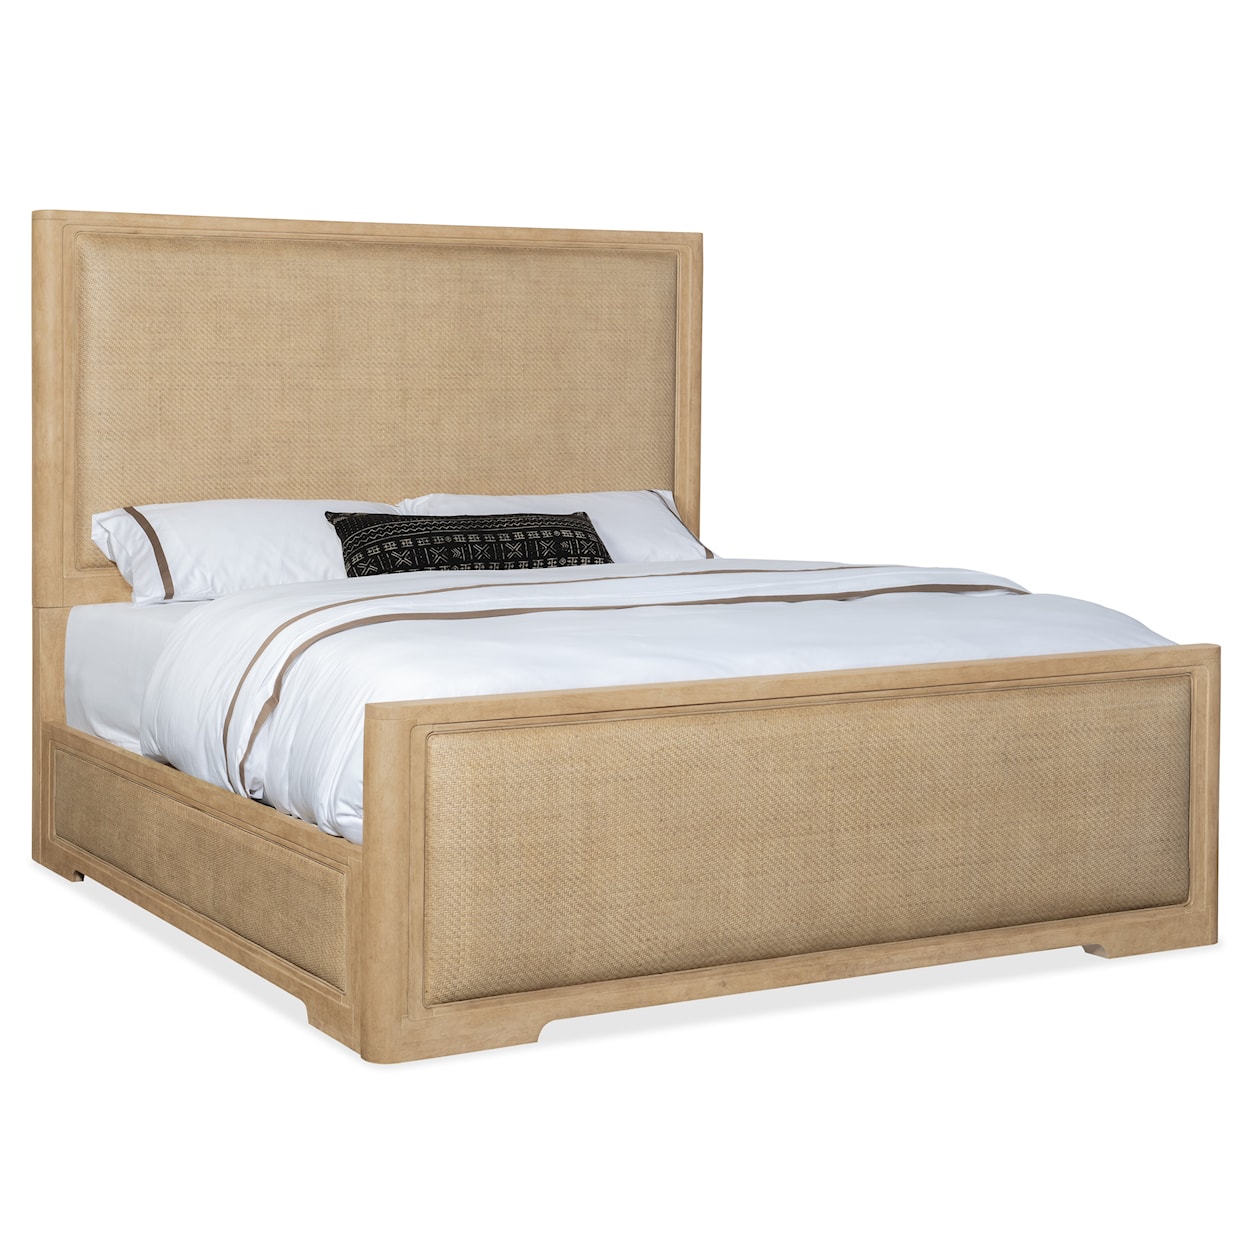 Hooker Furniture Retreat California King Cane Panel Bed